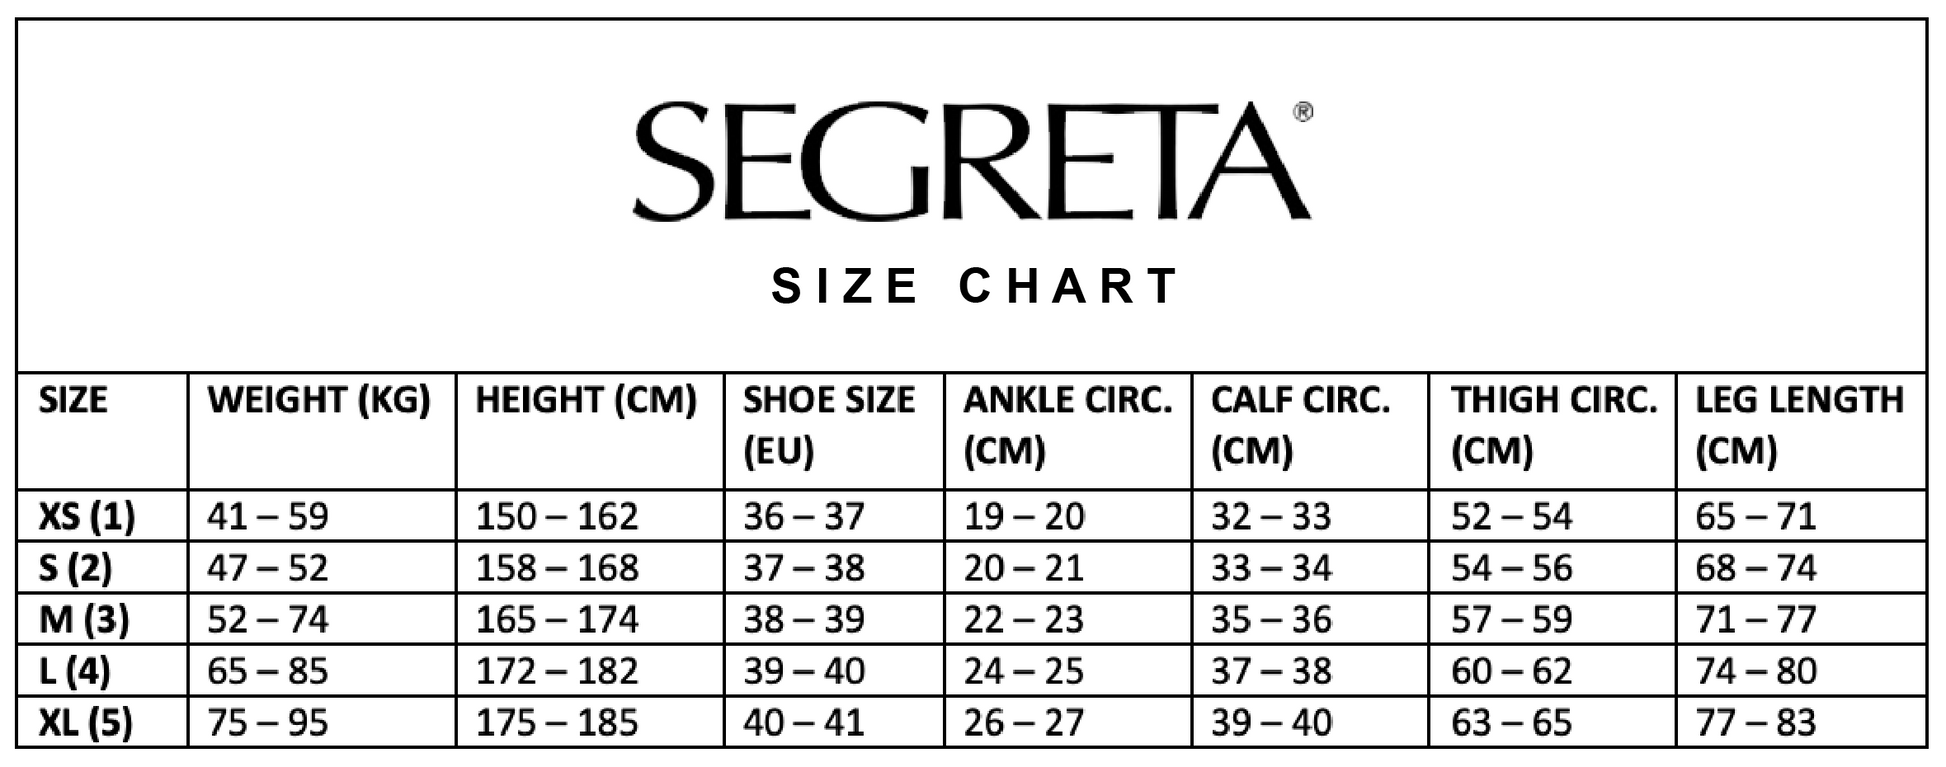 Ibici Segreta - Size Chart